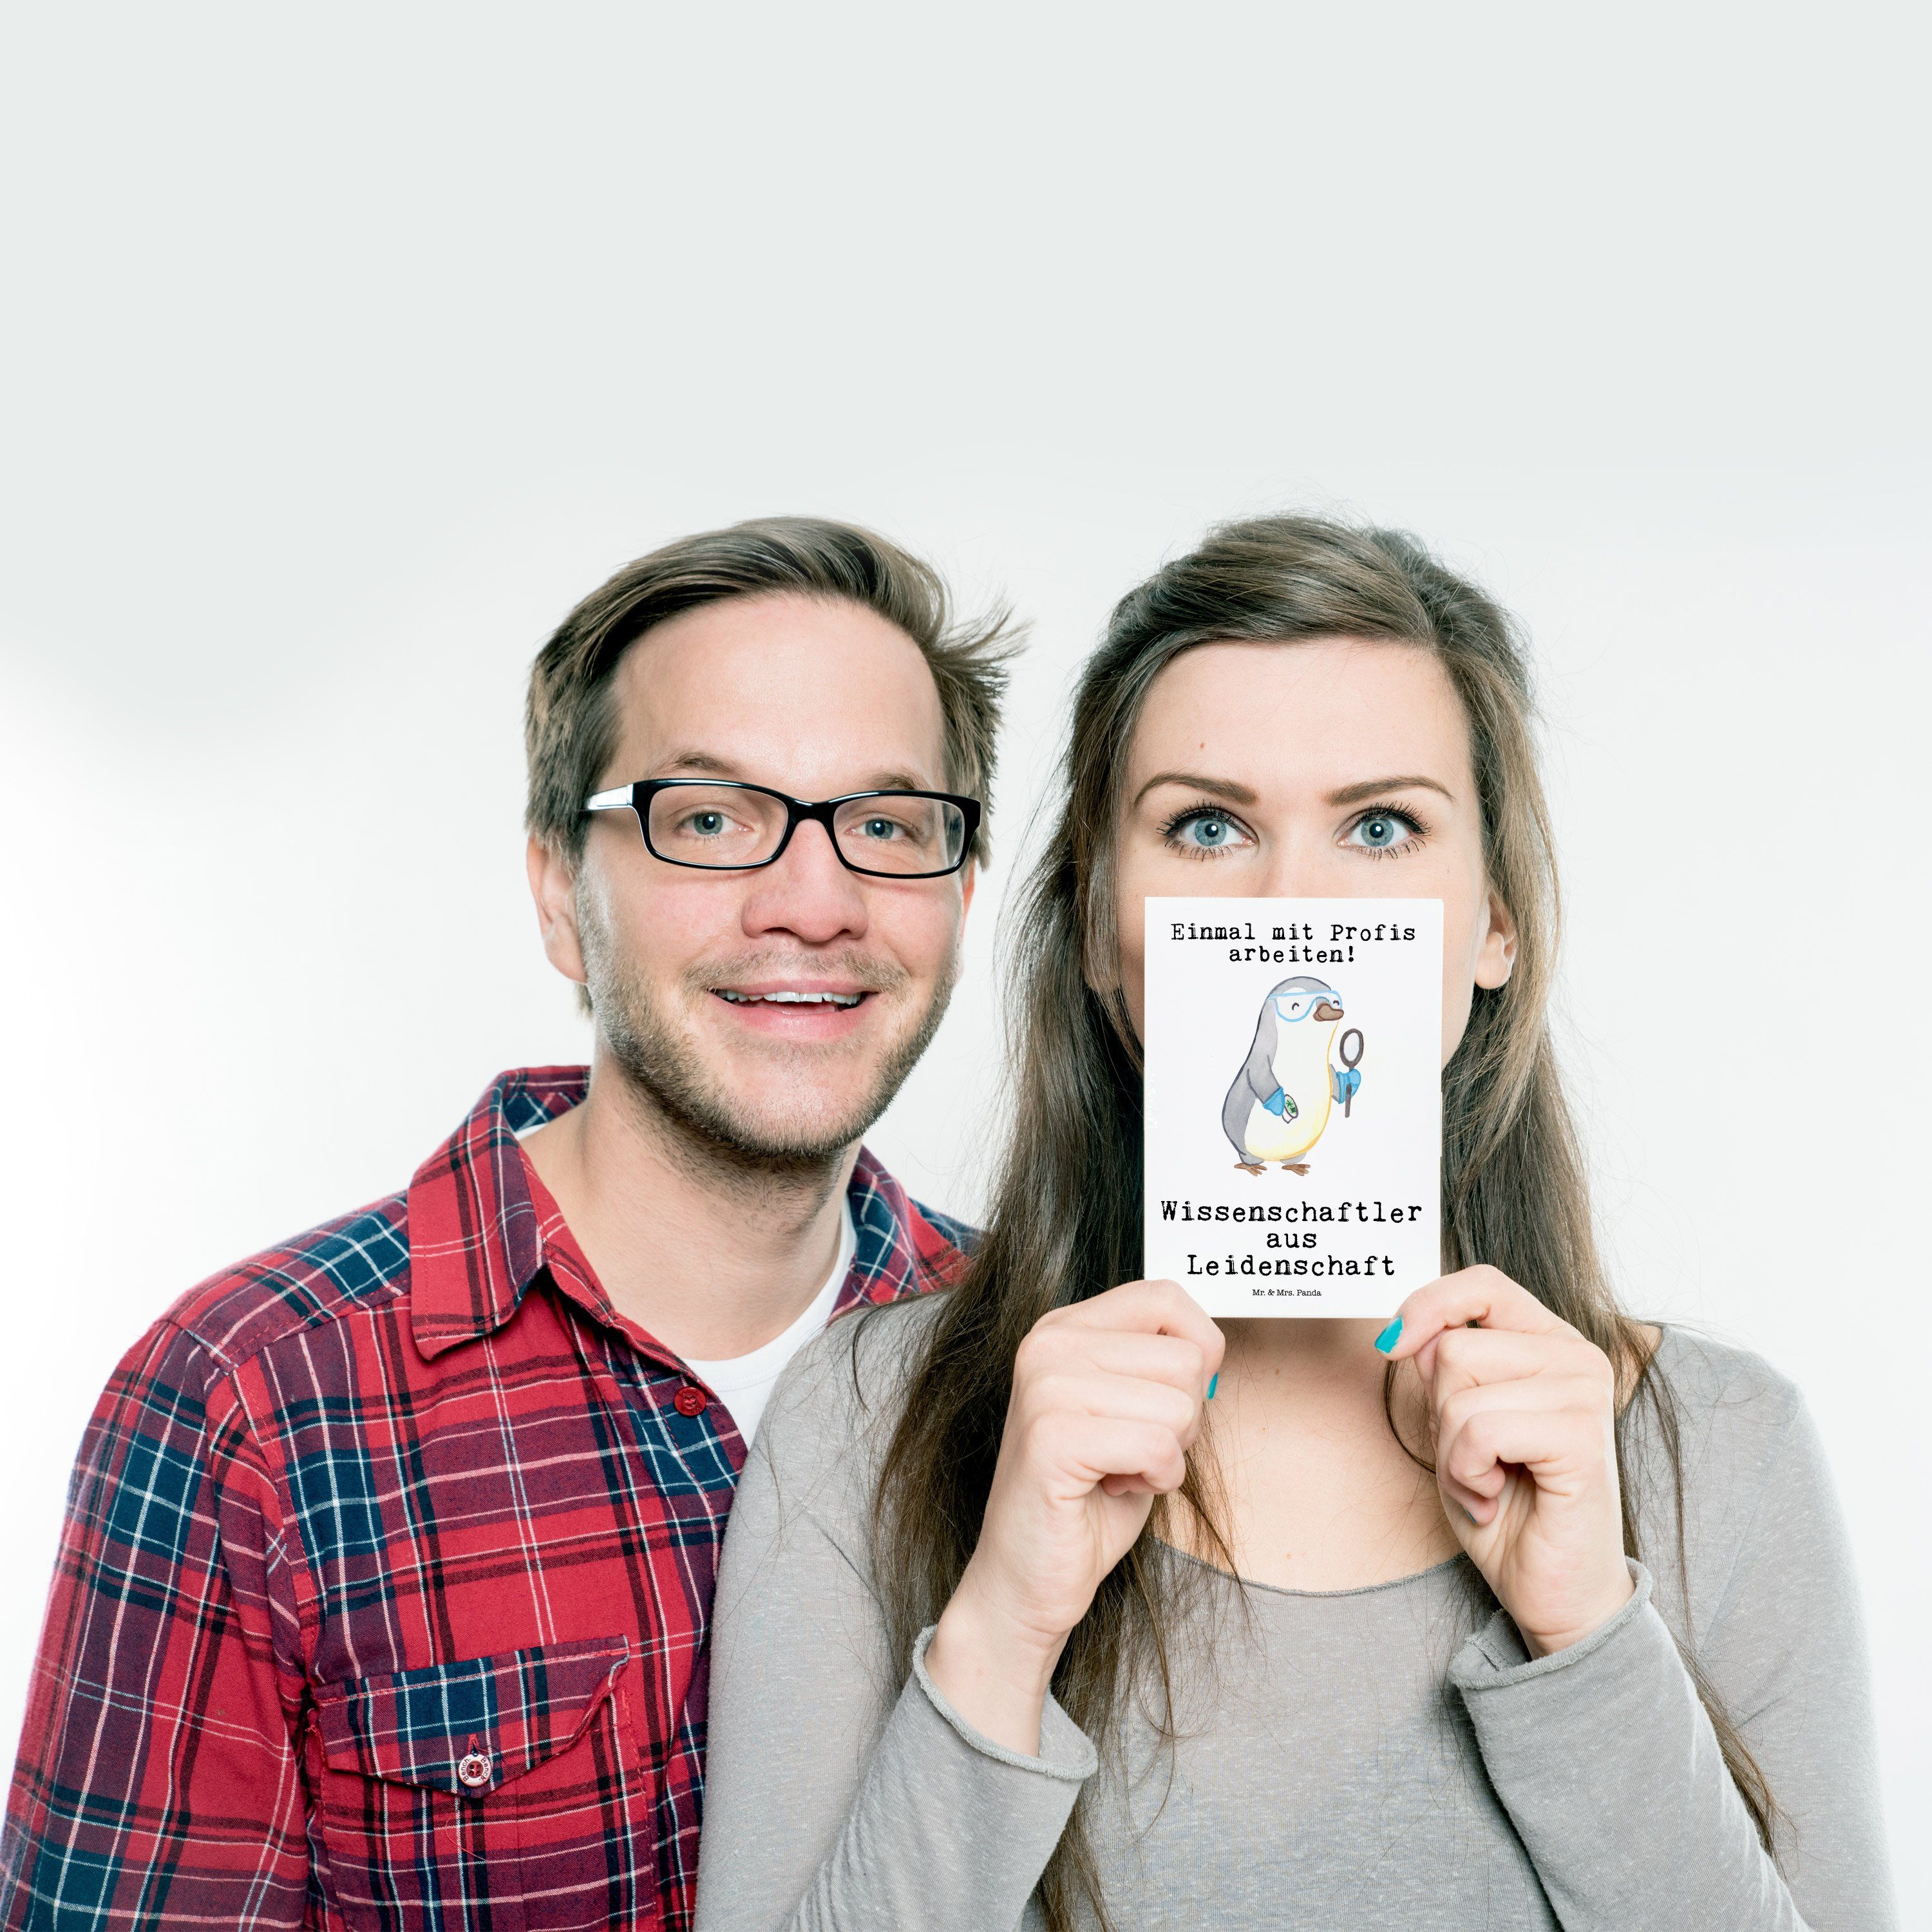 Mr. & Mrs. Grußkarte, Akadem Postkarte - - Geschenk, Panda Weiß Leidenschaft Wissenschaftler aus